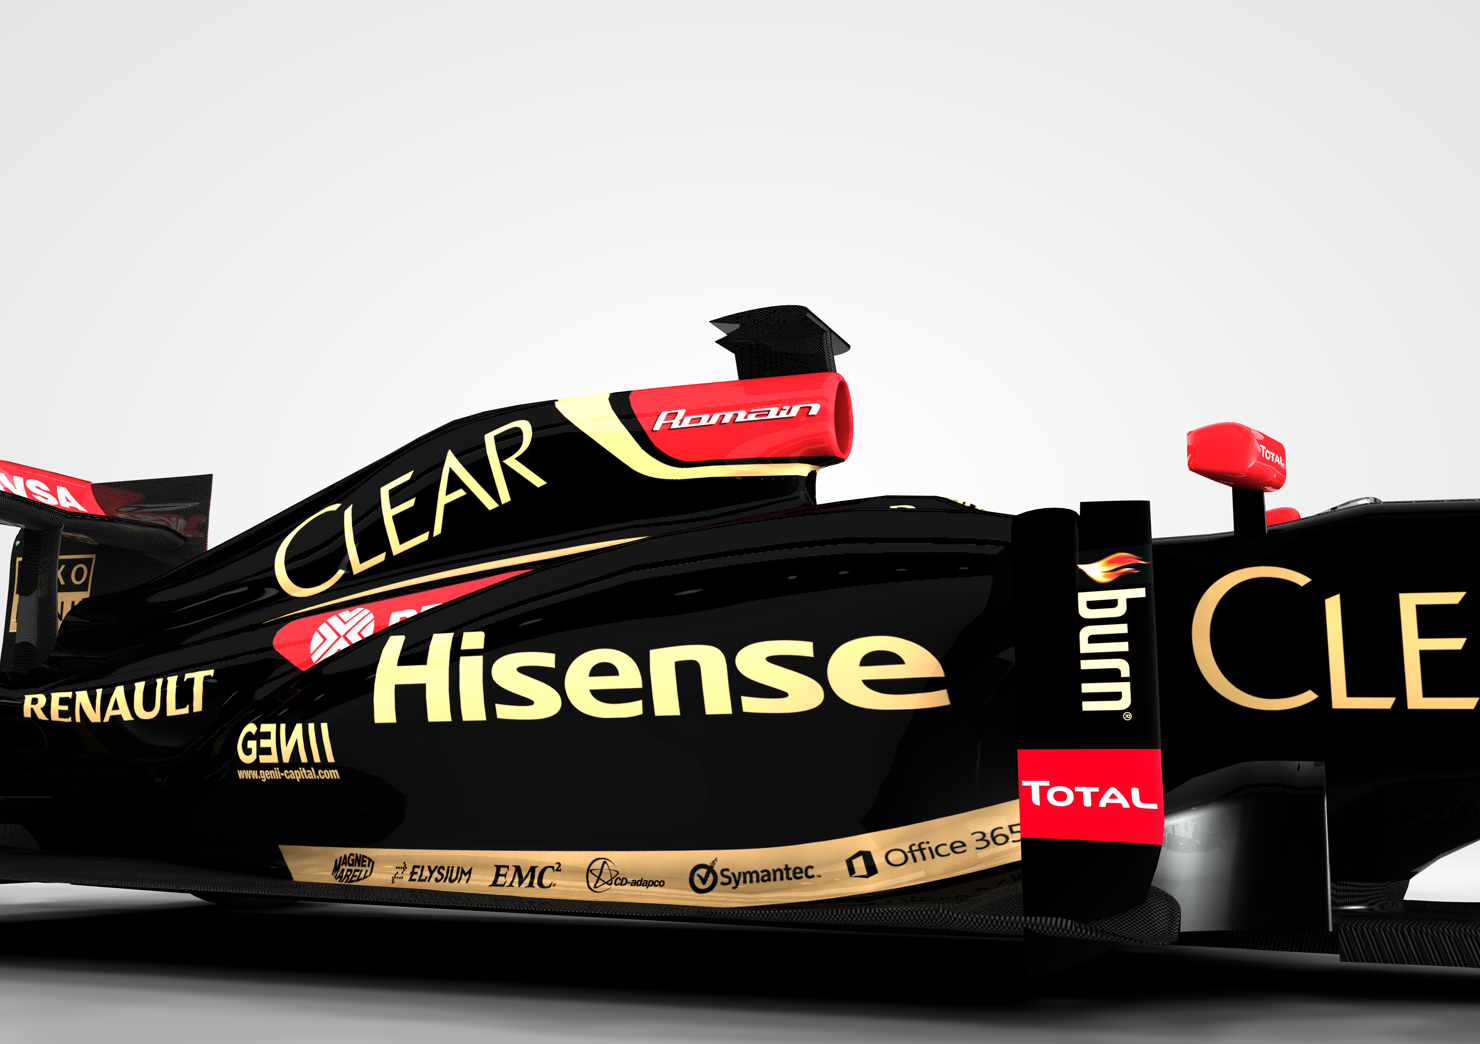 hisense sponsor Lotus F1 Team